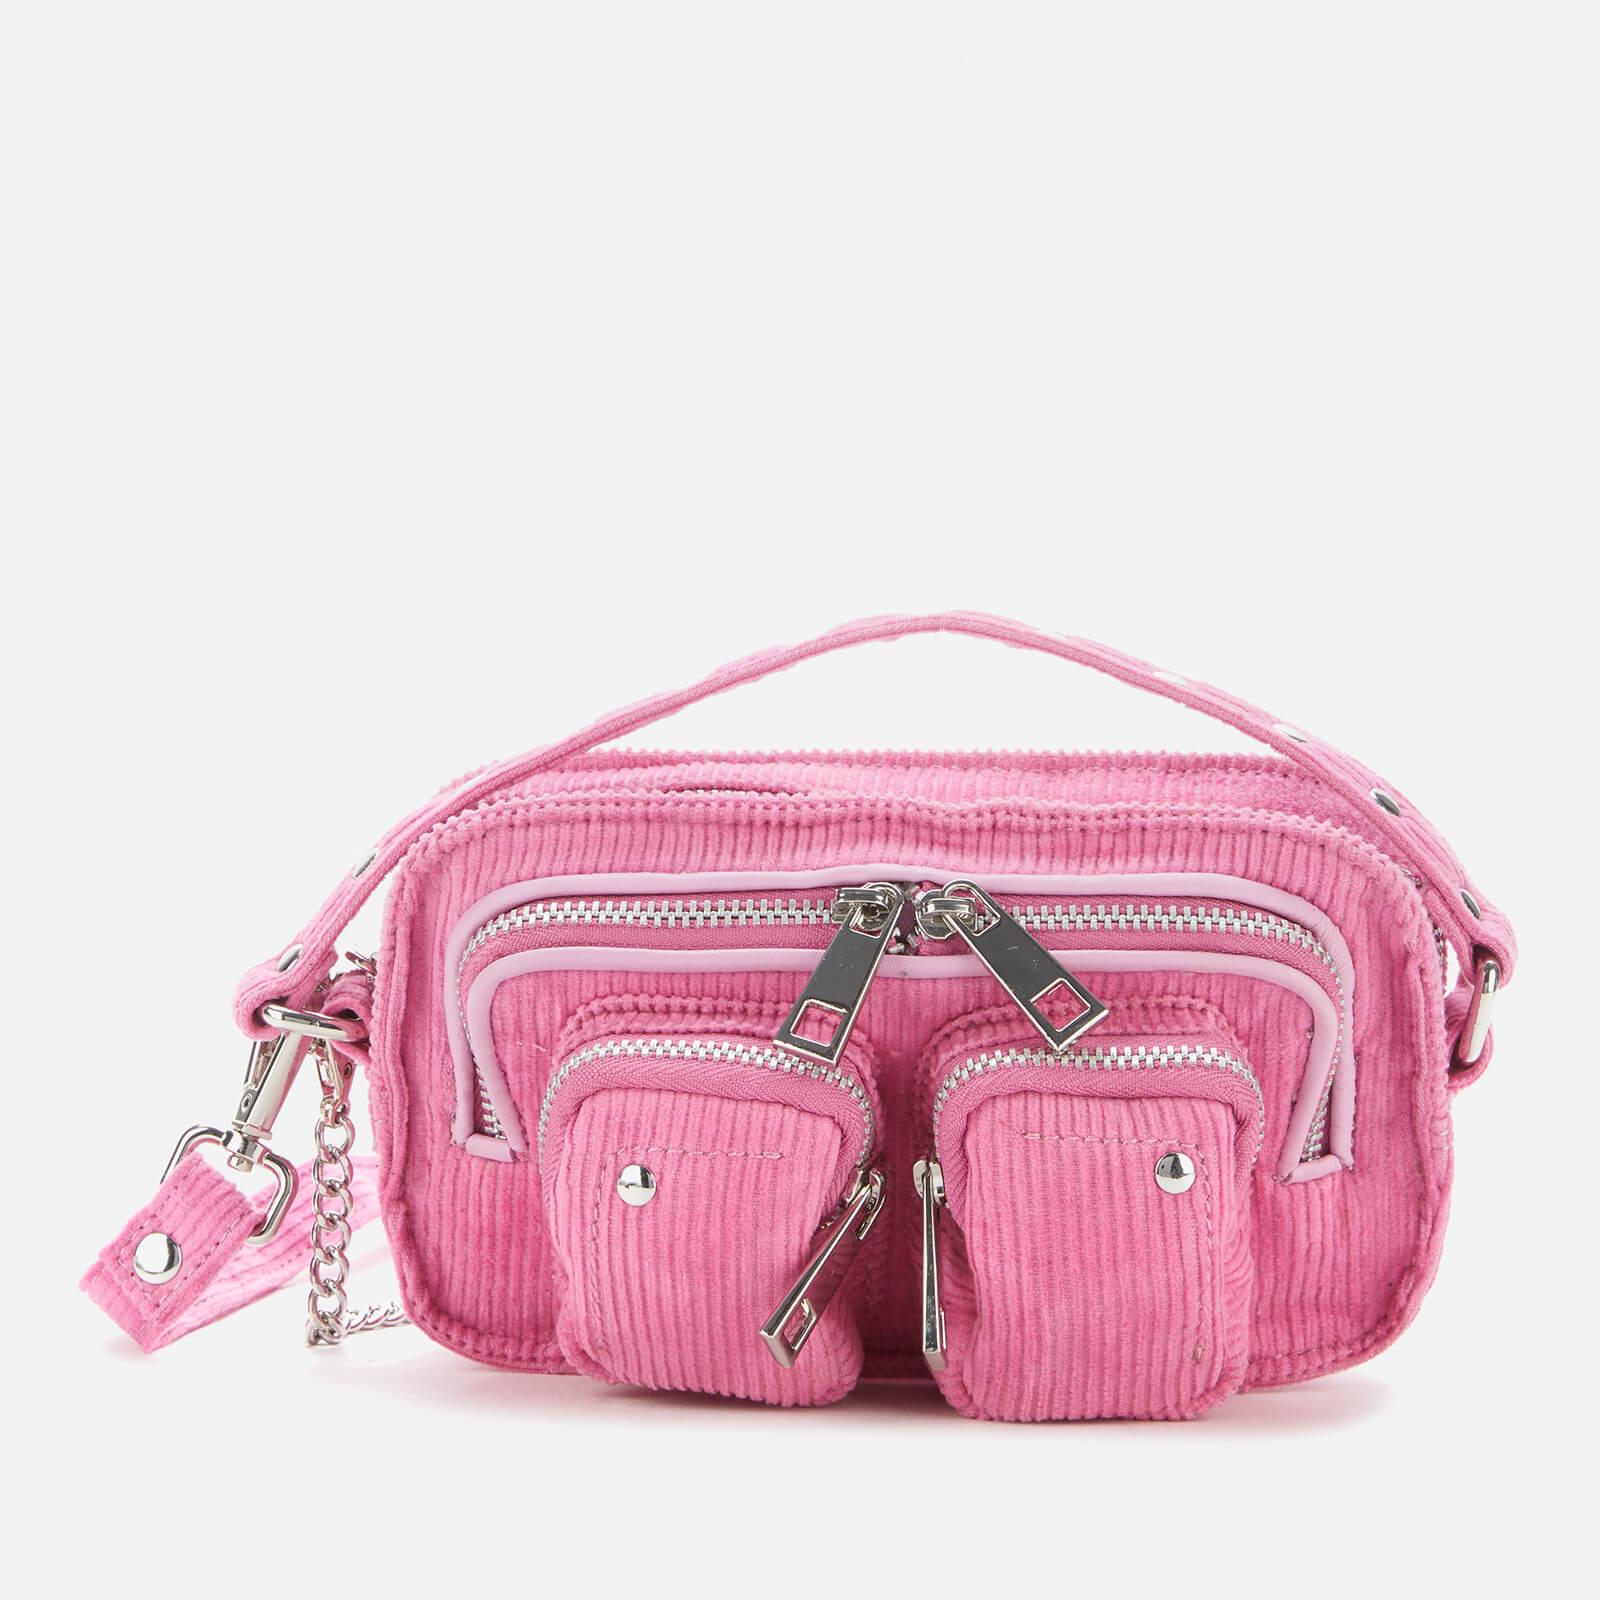 Nunoo Helena Corduroy Cross Body Bag in Pink | Lyst Australia